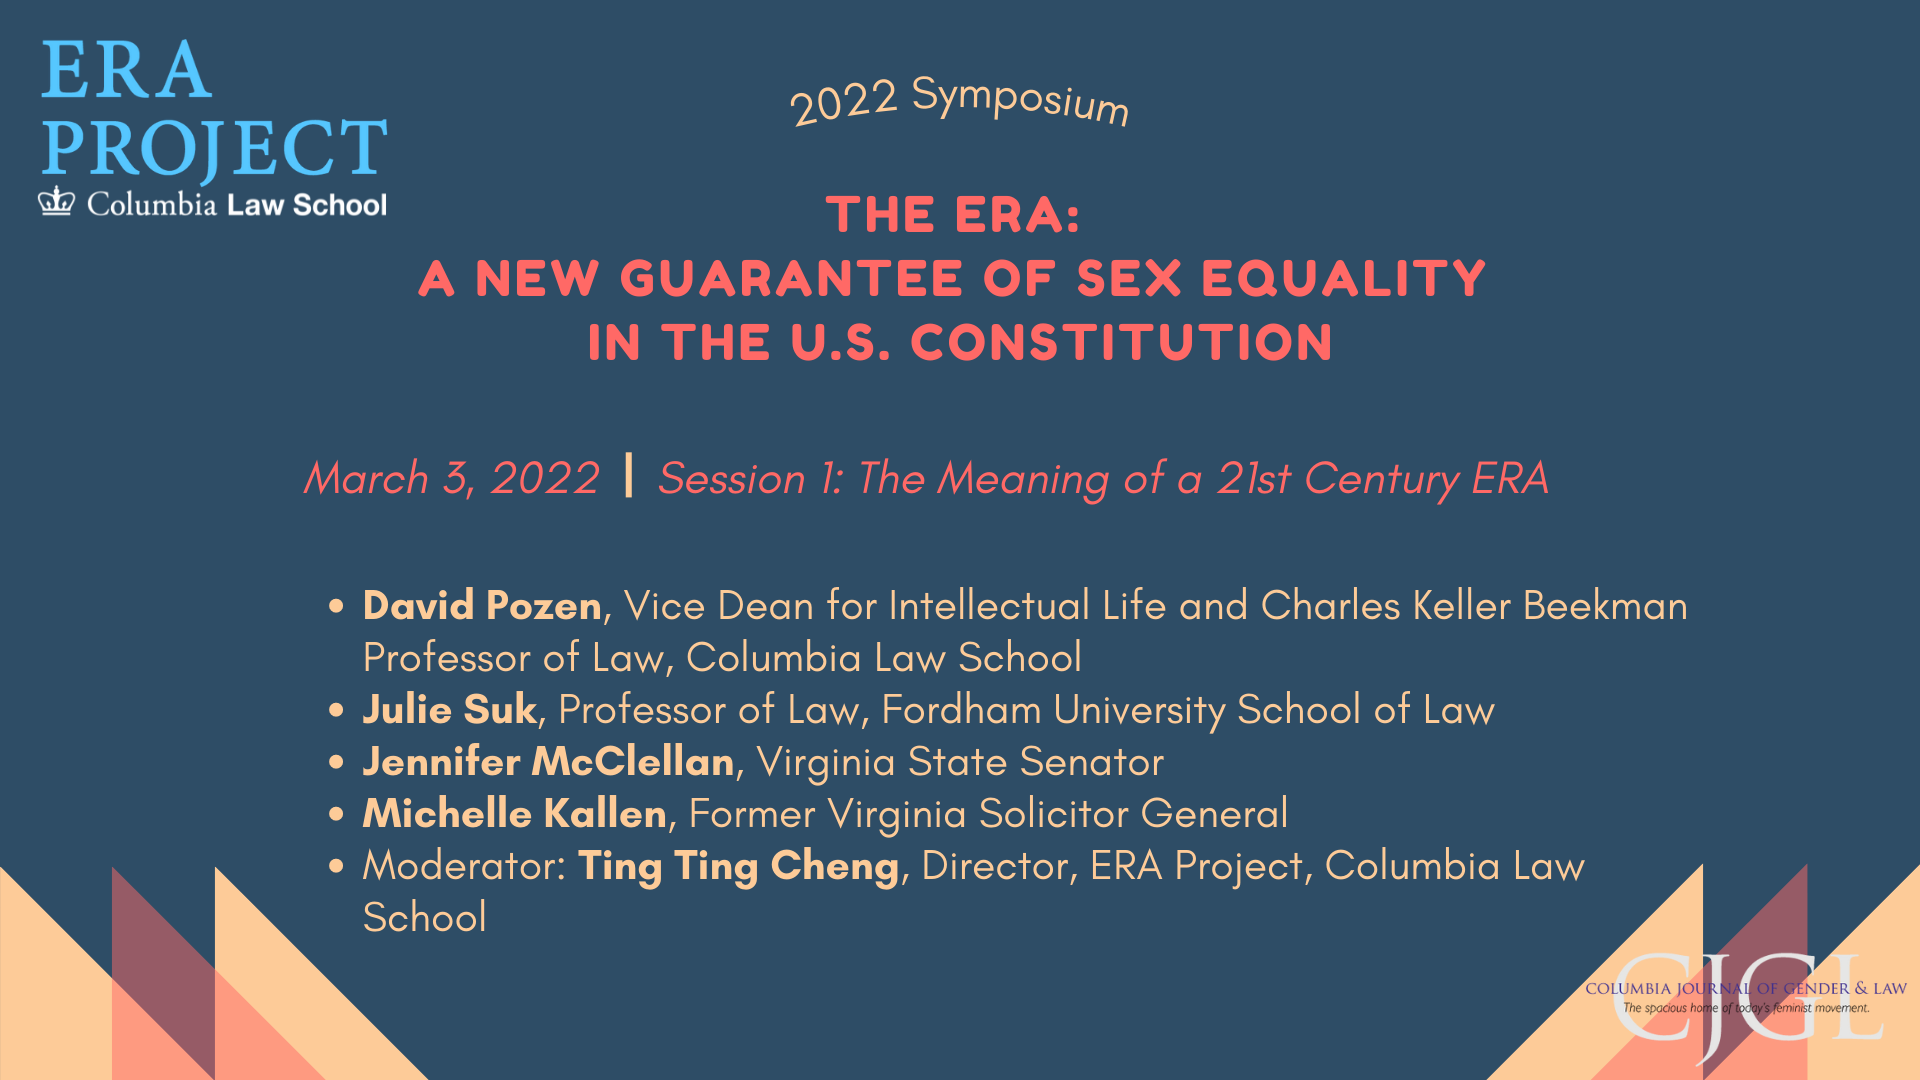 ERA Symposium 2022 - Session 1 - The Meaning of a 21st Century ERA